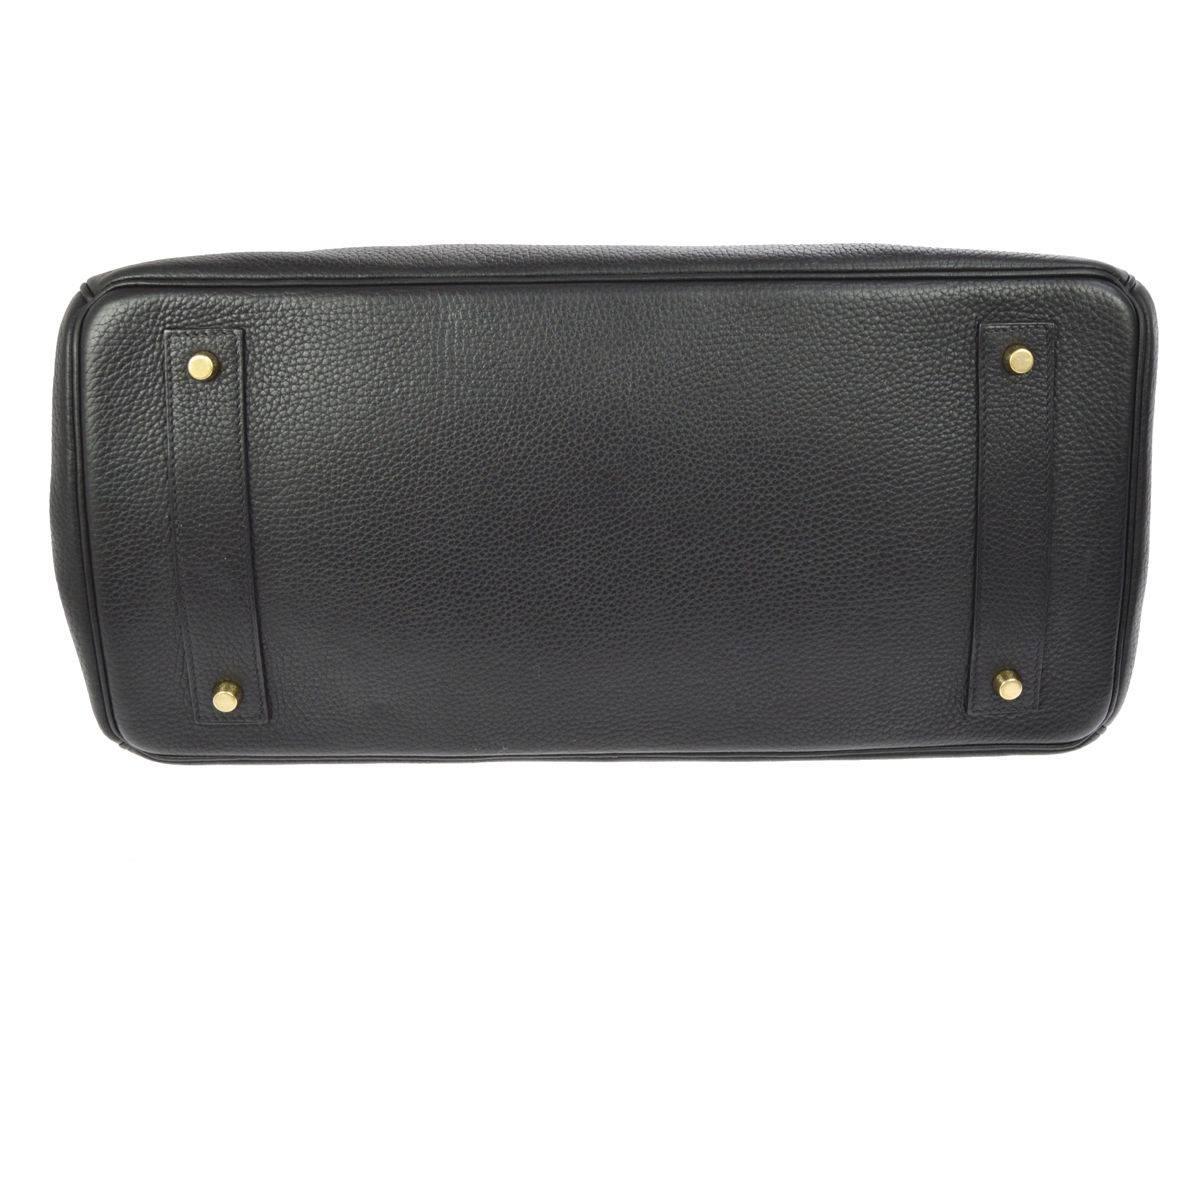 Hermes JPG Birkin Black Leather Gold Hardware Top Handle Satchel Bag 2